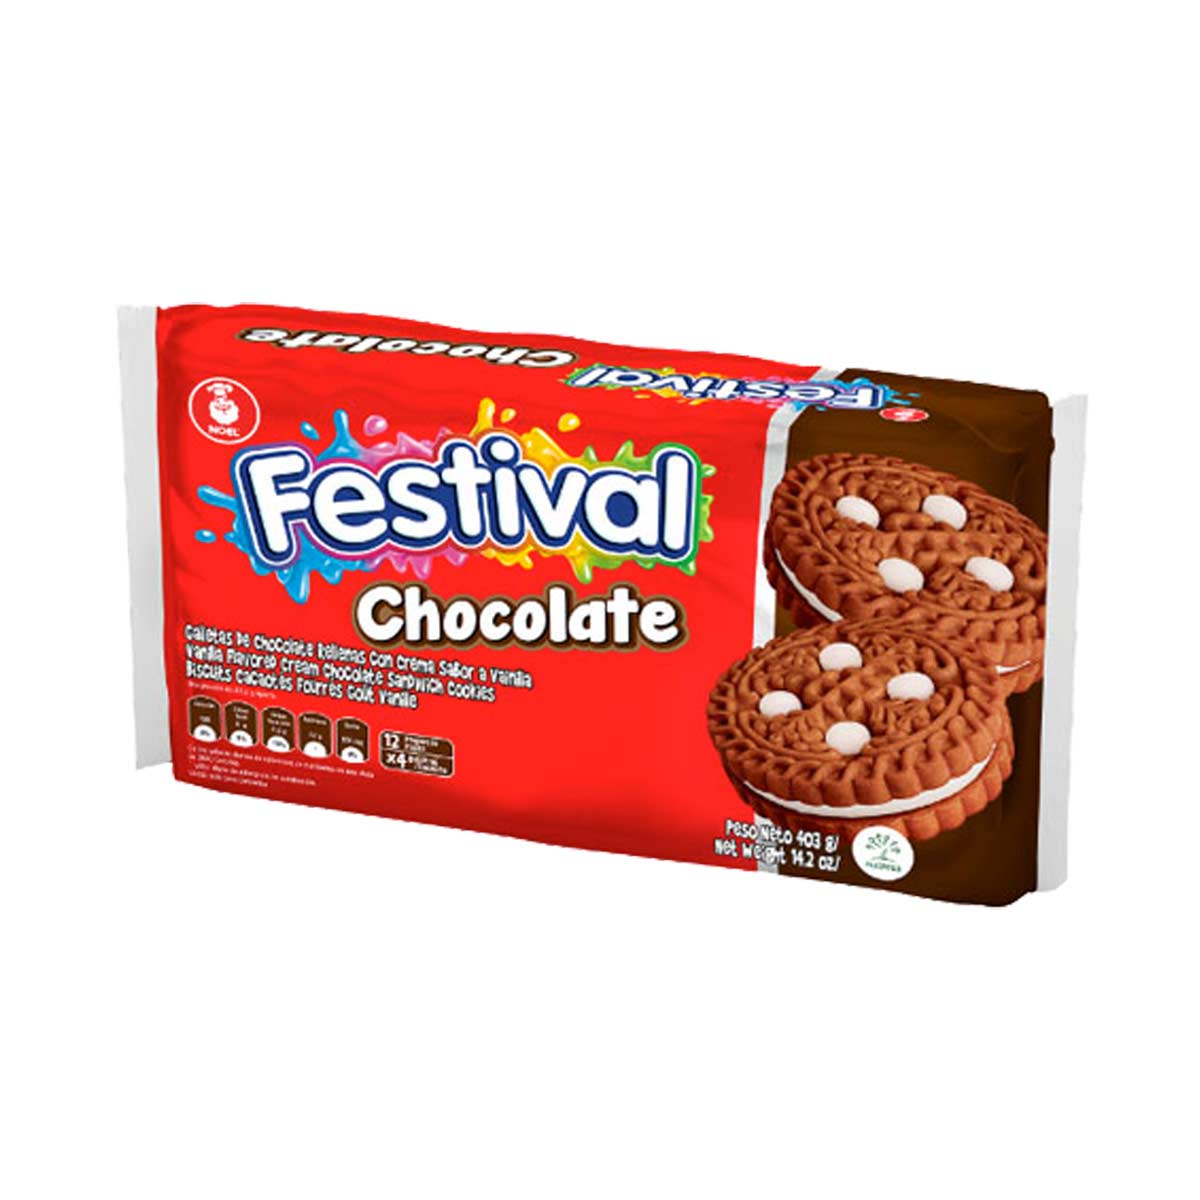 festivalchocolate12